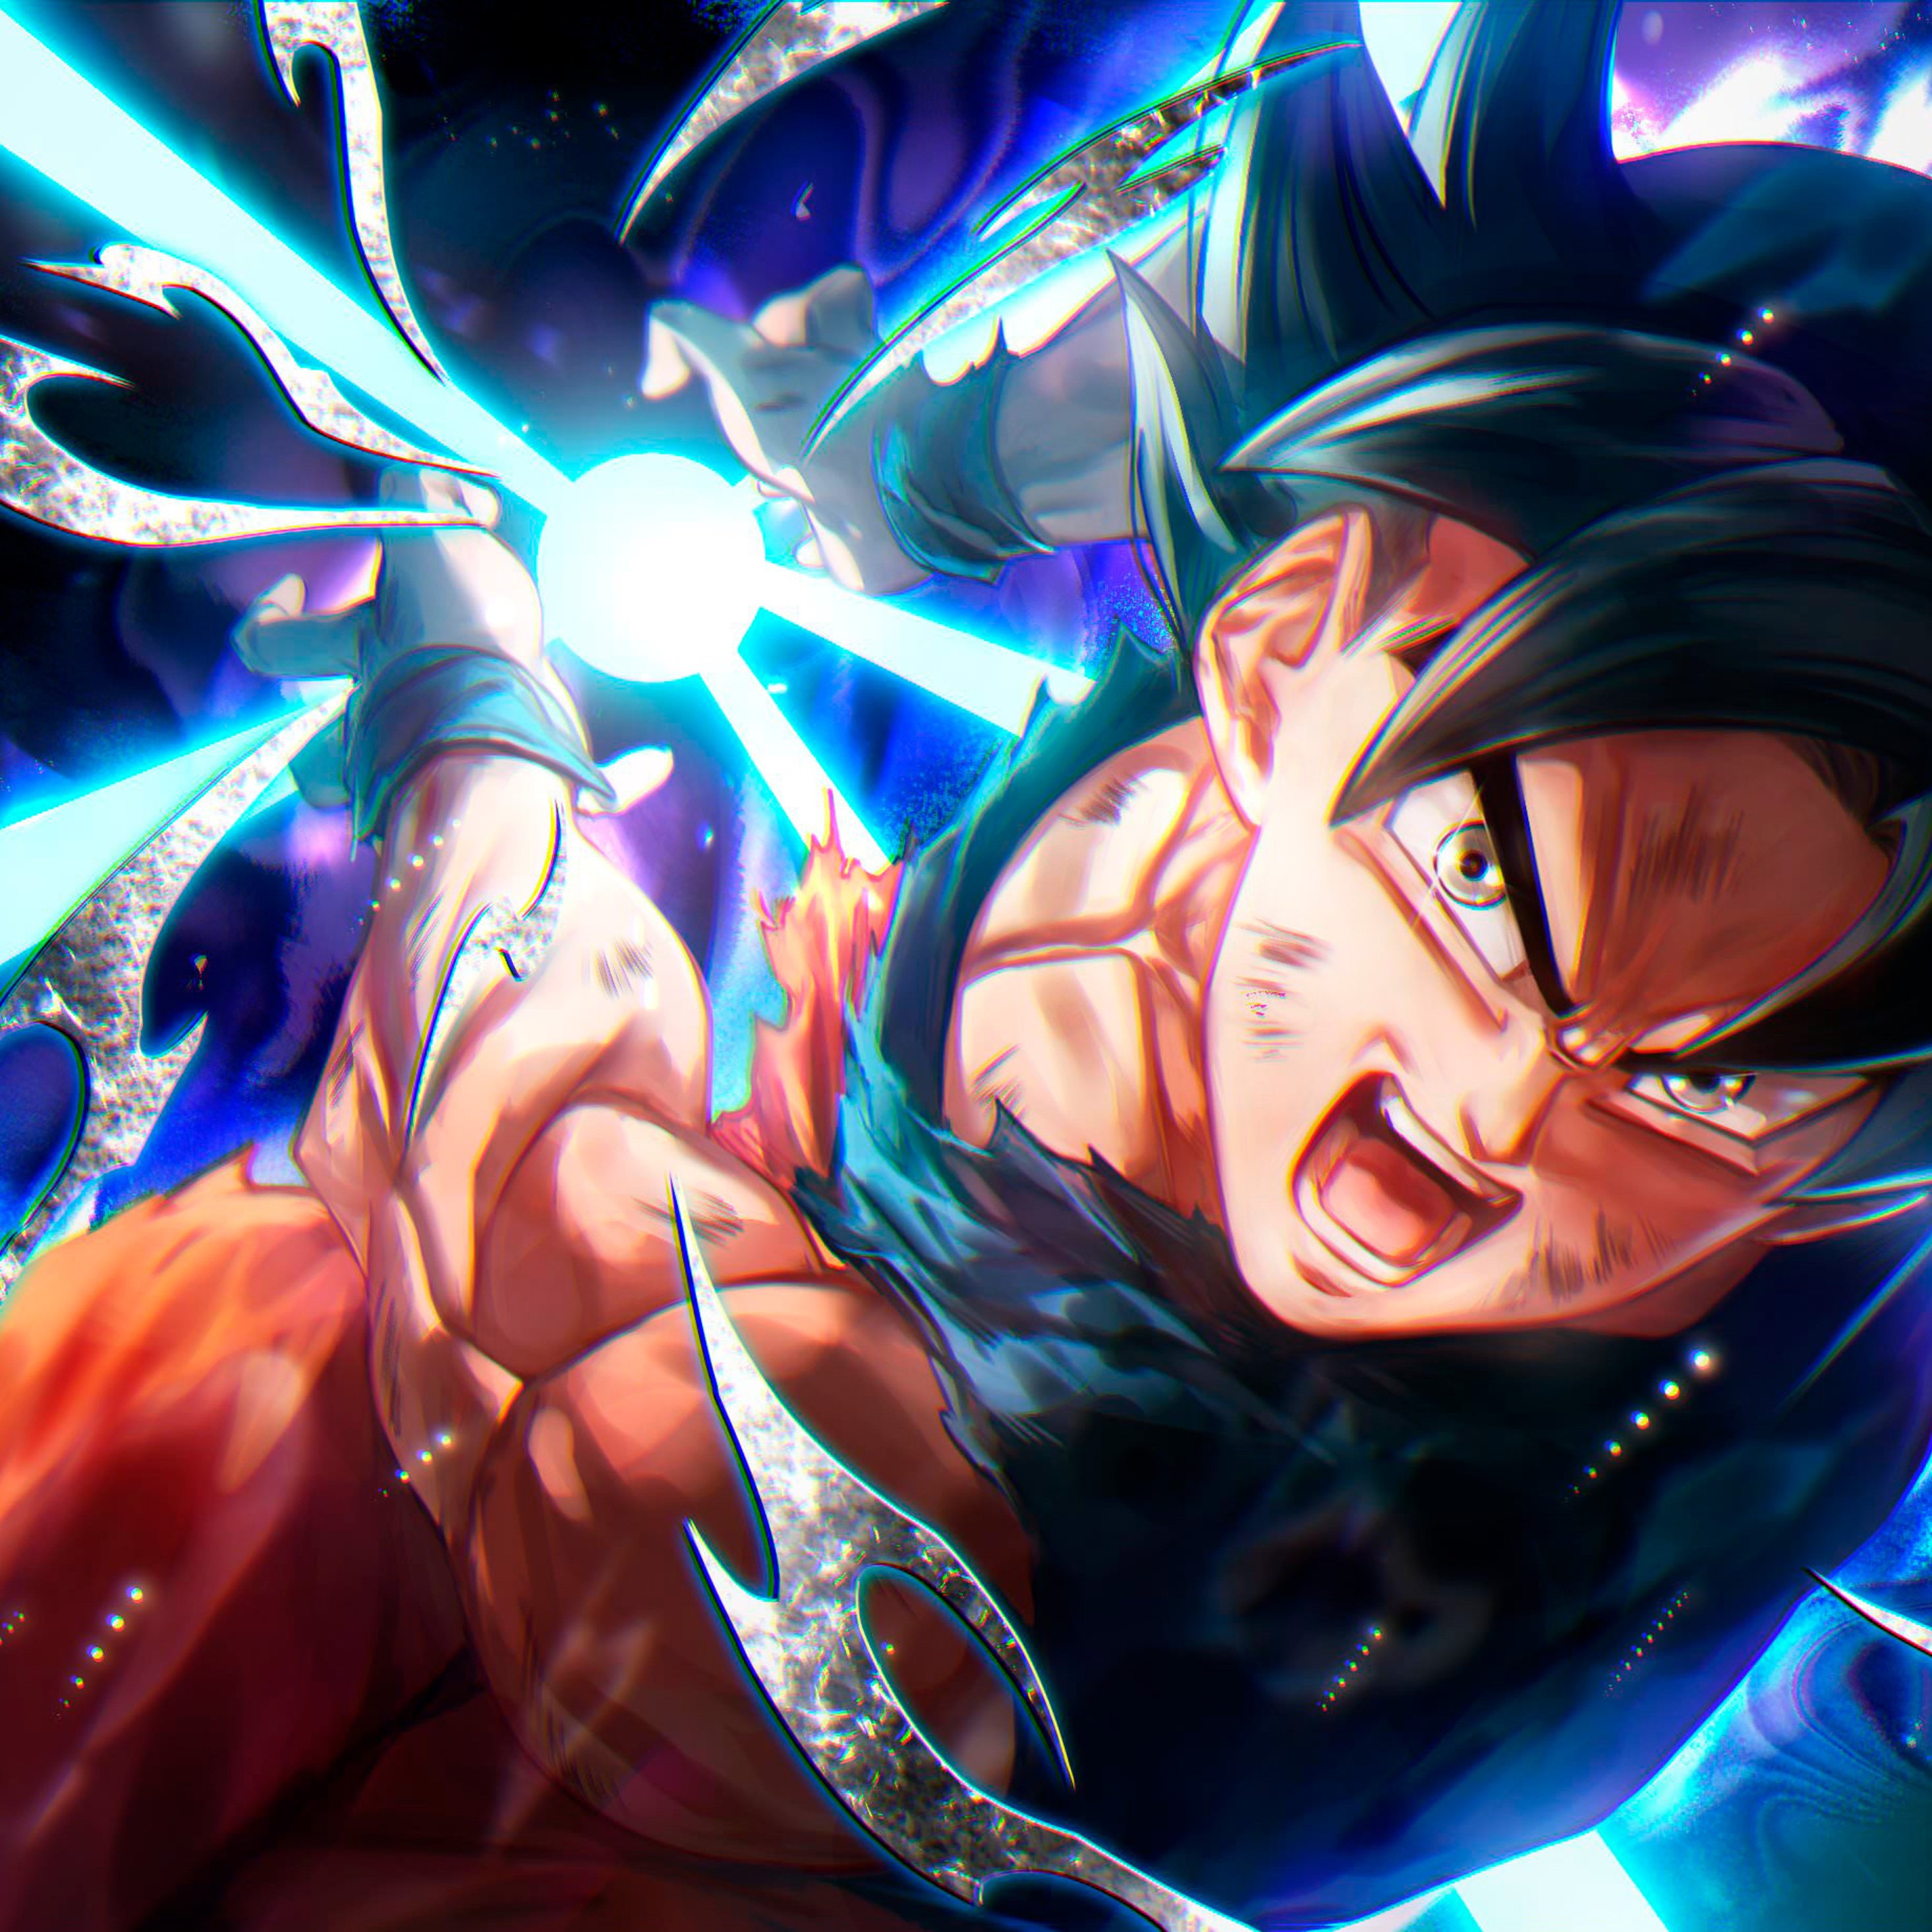 Goku In Dragon Ball Super Anime 4k iPad Pro Retina Display HD 4k Wallpaper, Image, Background, Photo and Picture